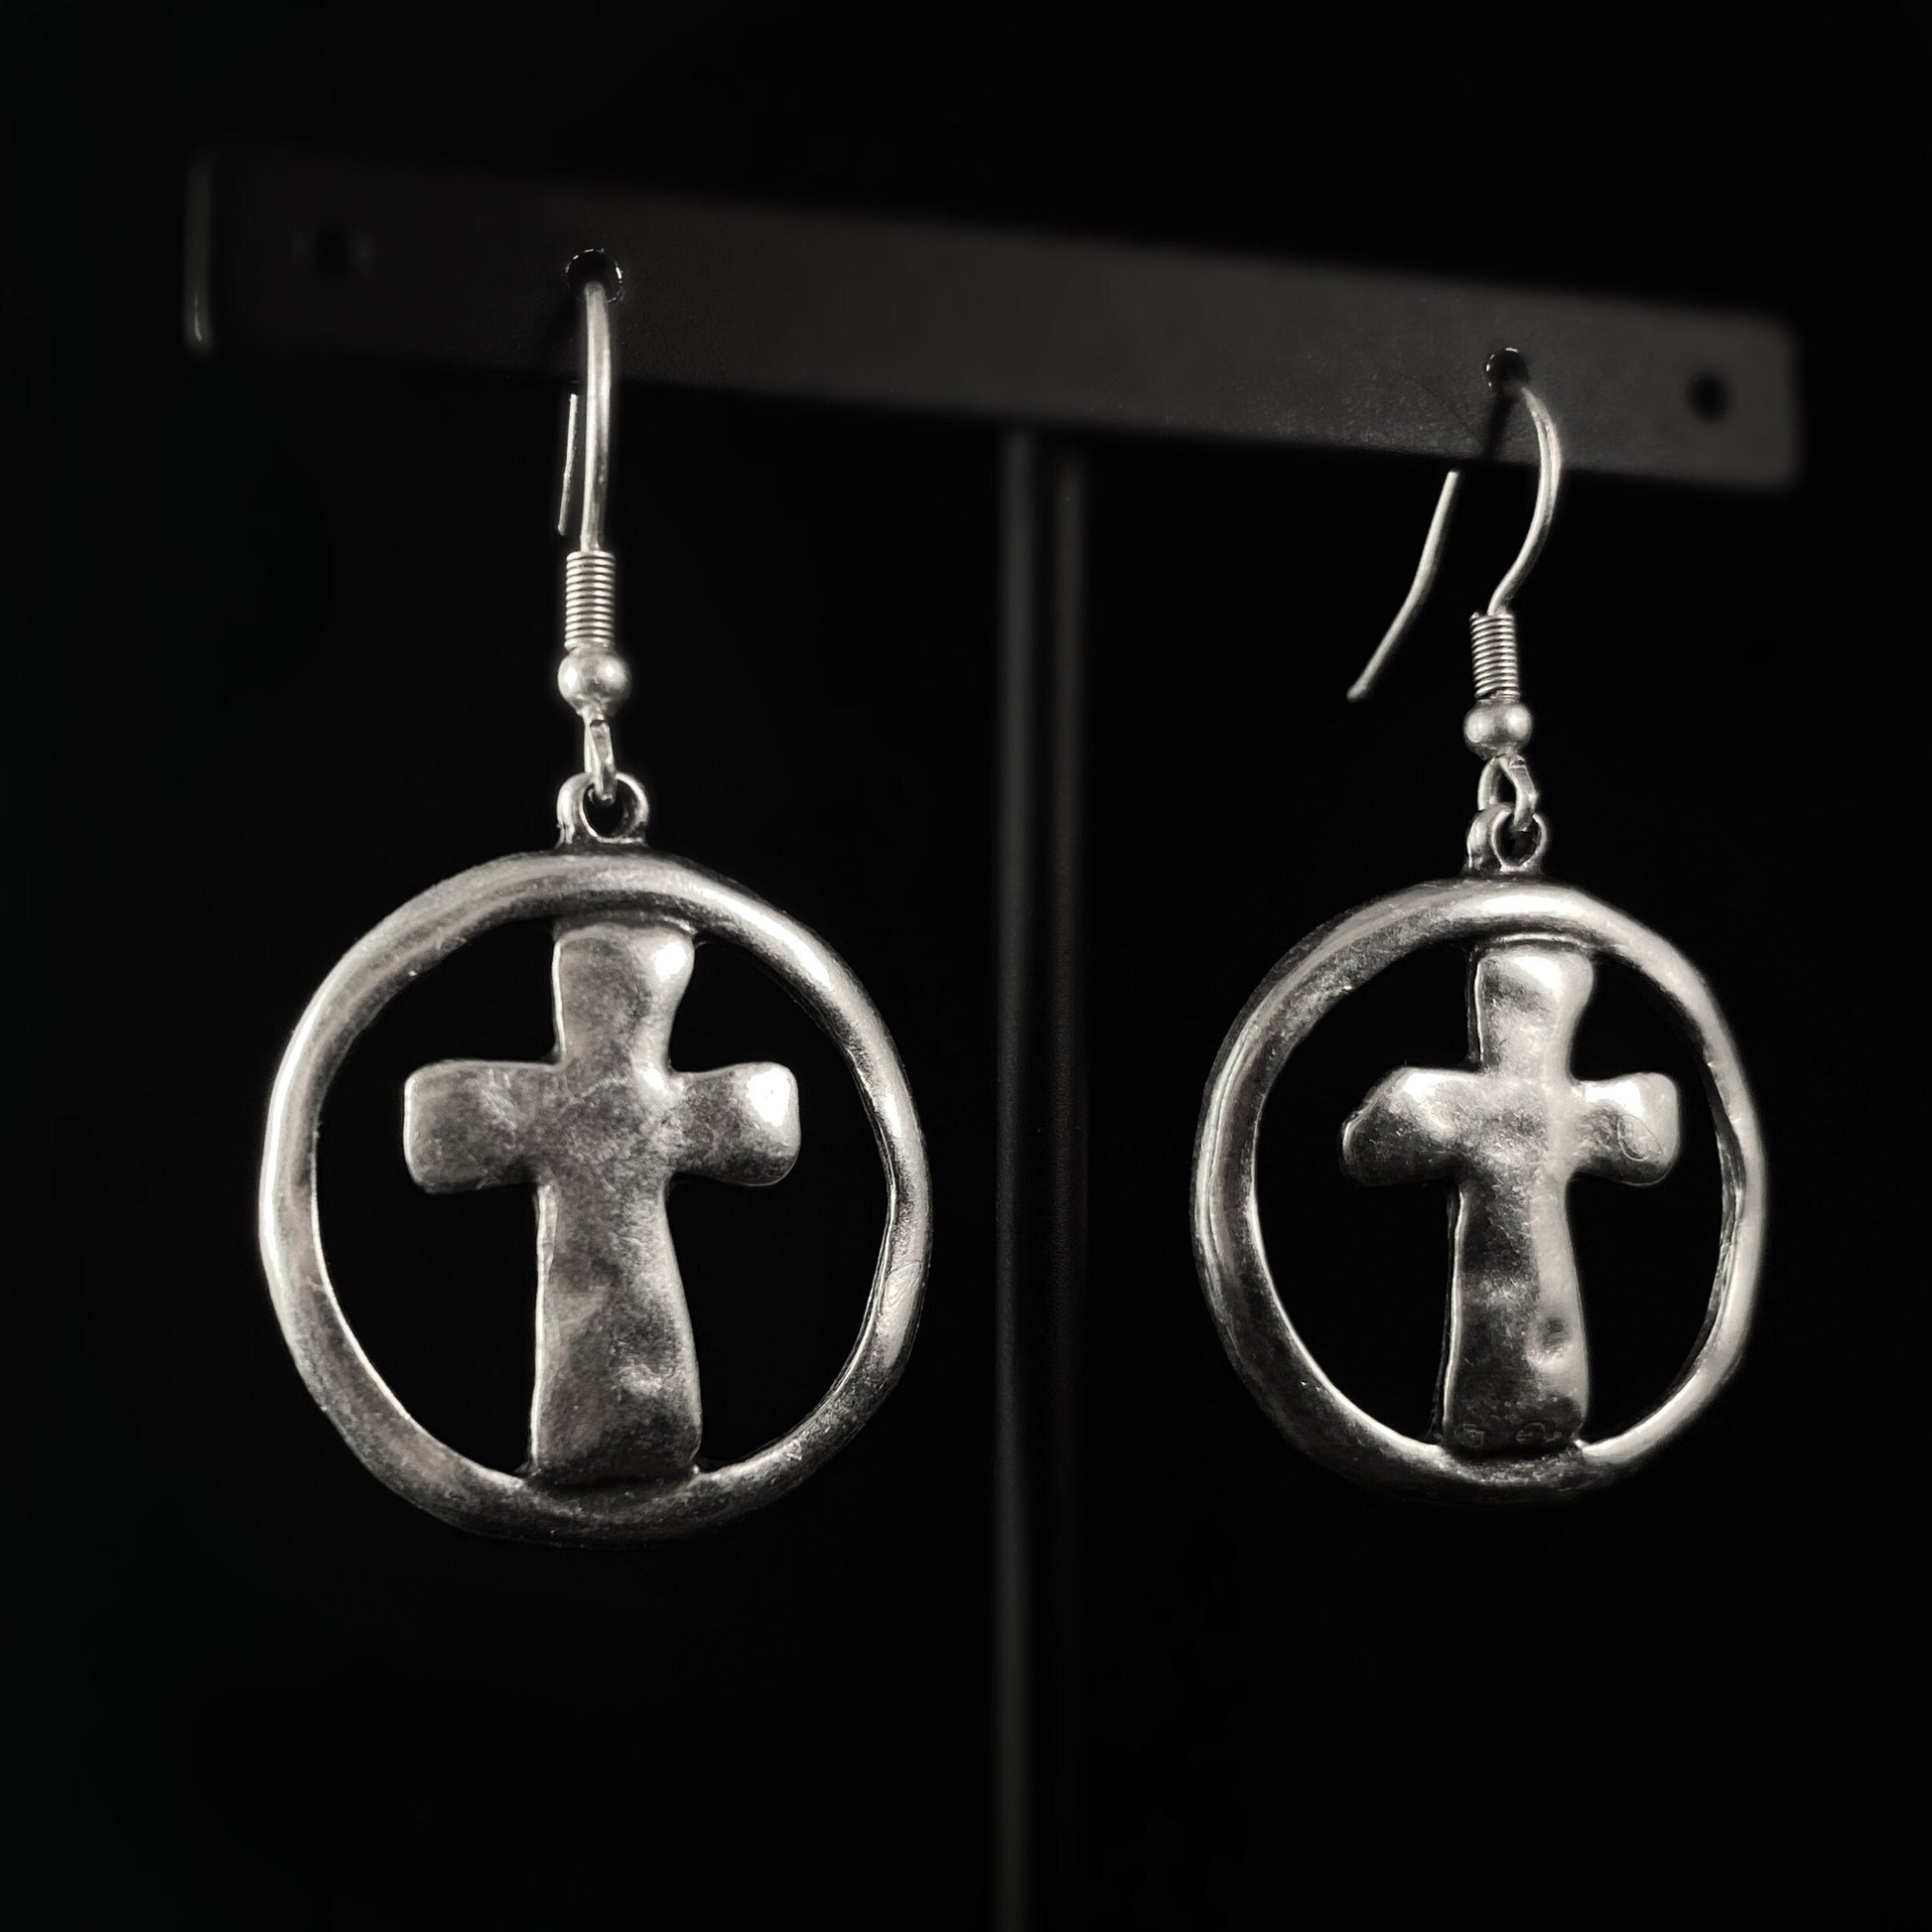 Silver Circle Cross Drop Earrings, Handmade, Nickel Free - Elegant Minimalist Jewelry for Women